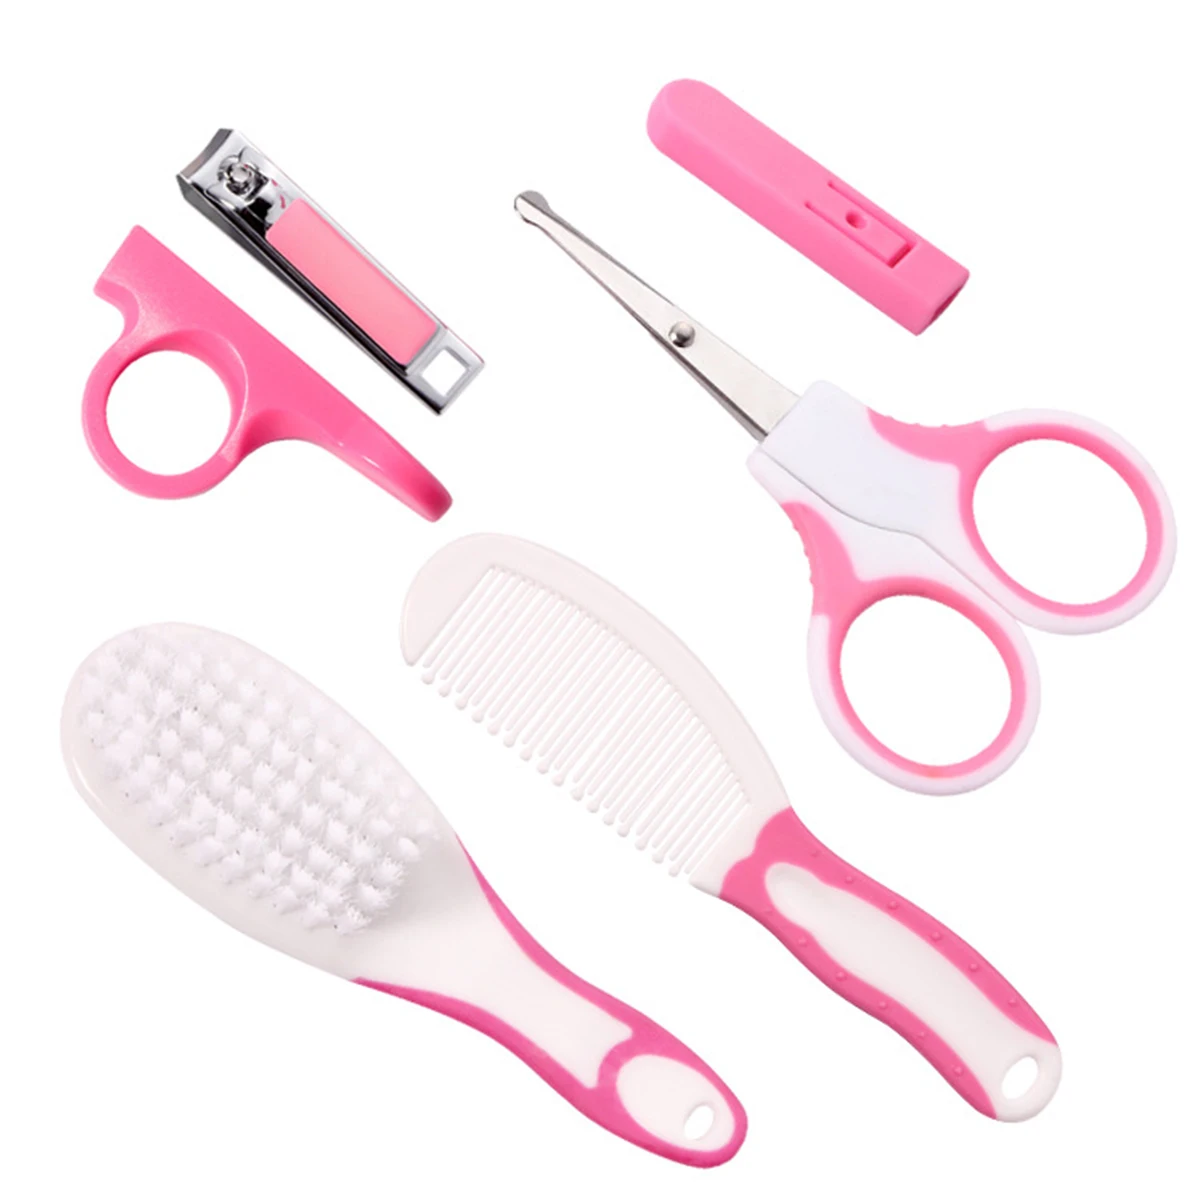 6Pcs/Set Baby Infant Kids Nail Hair Health Care Grooming Brush Comb Scissors Kit Grooming Brush Kit Baby Care